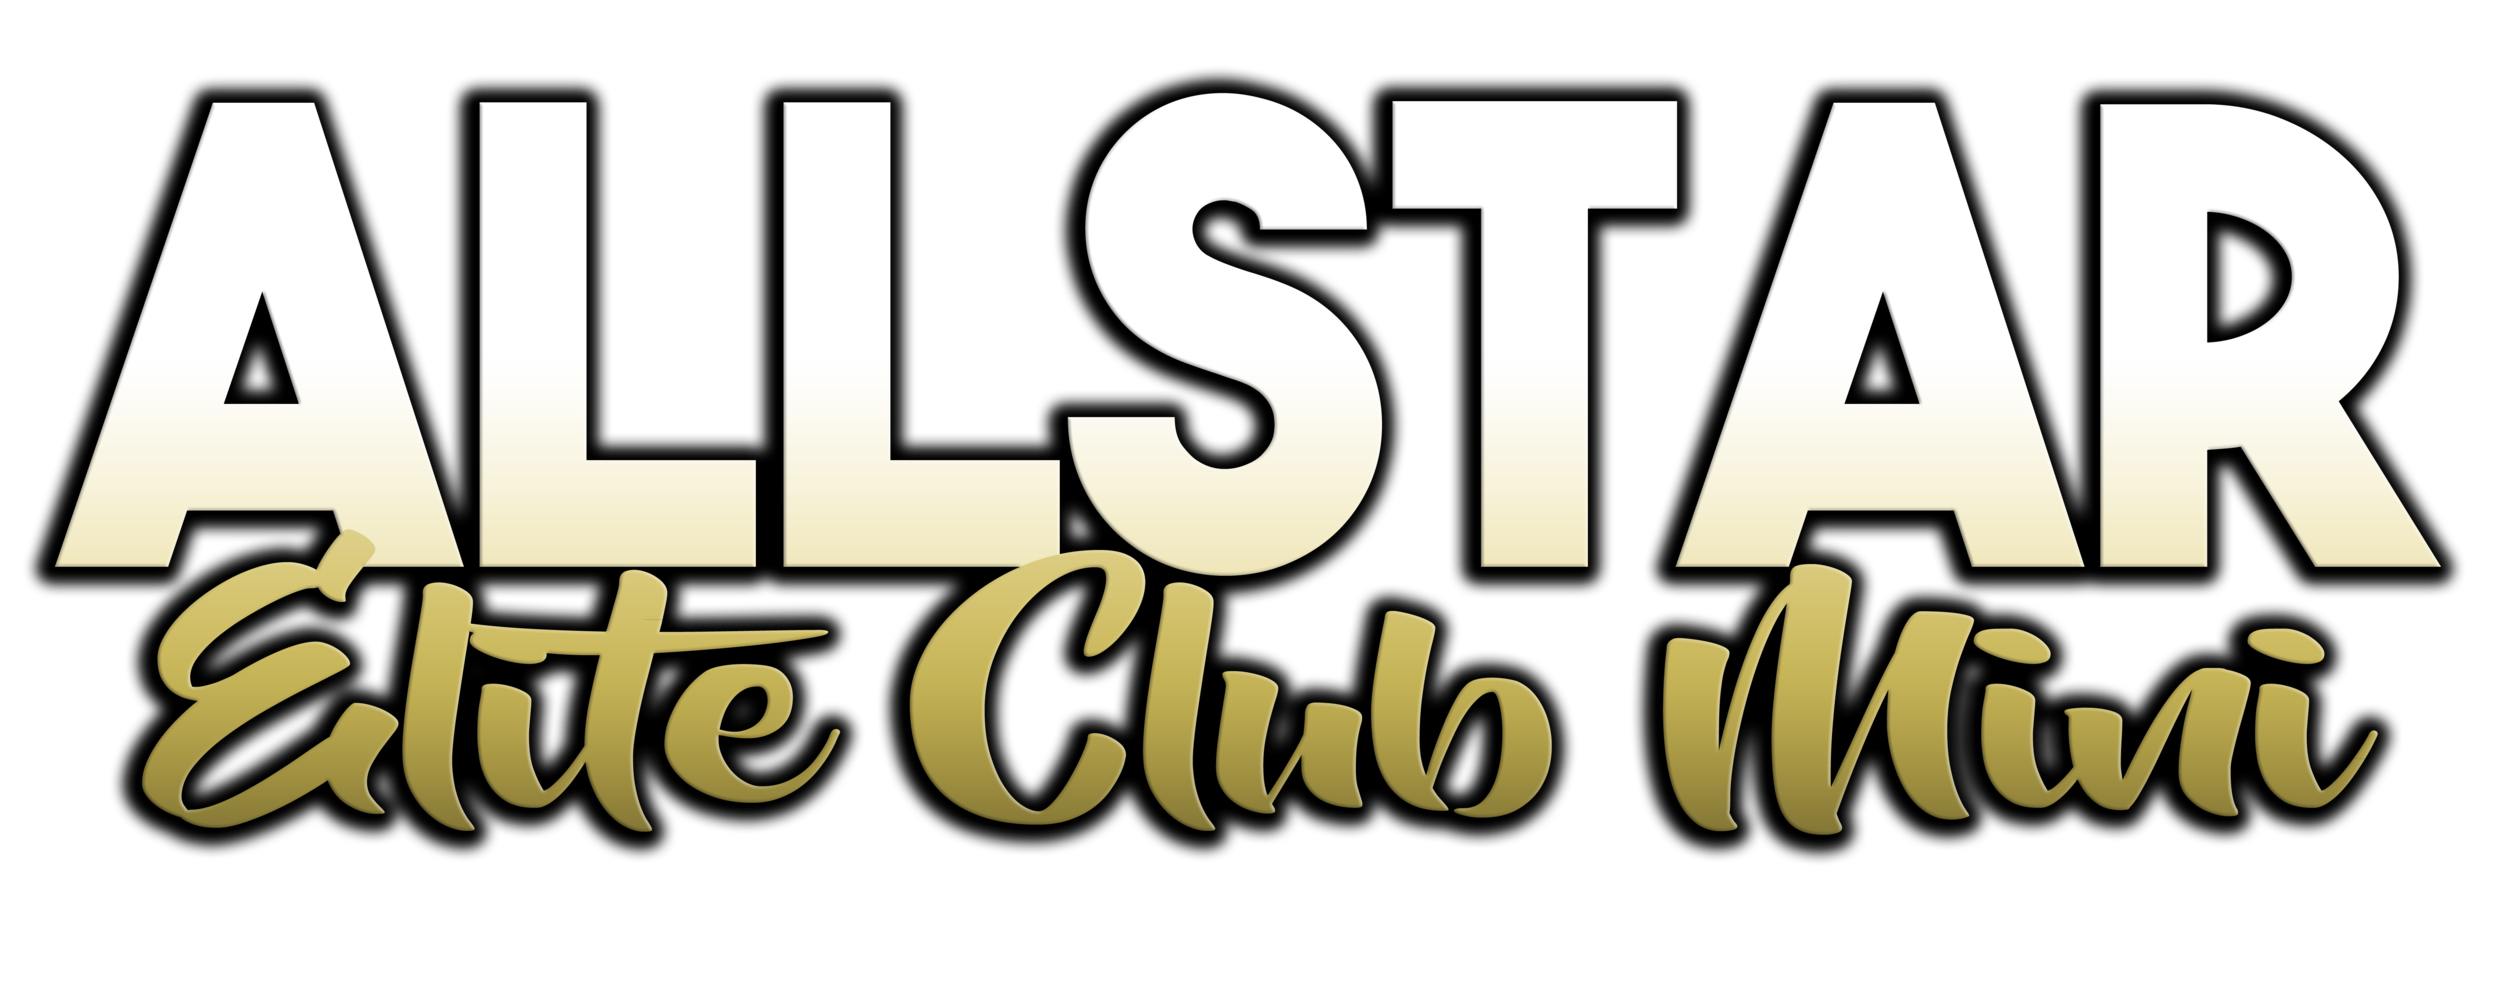 ALLSTAR ELITE CLUB MINI — Rock Solid Allstars